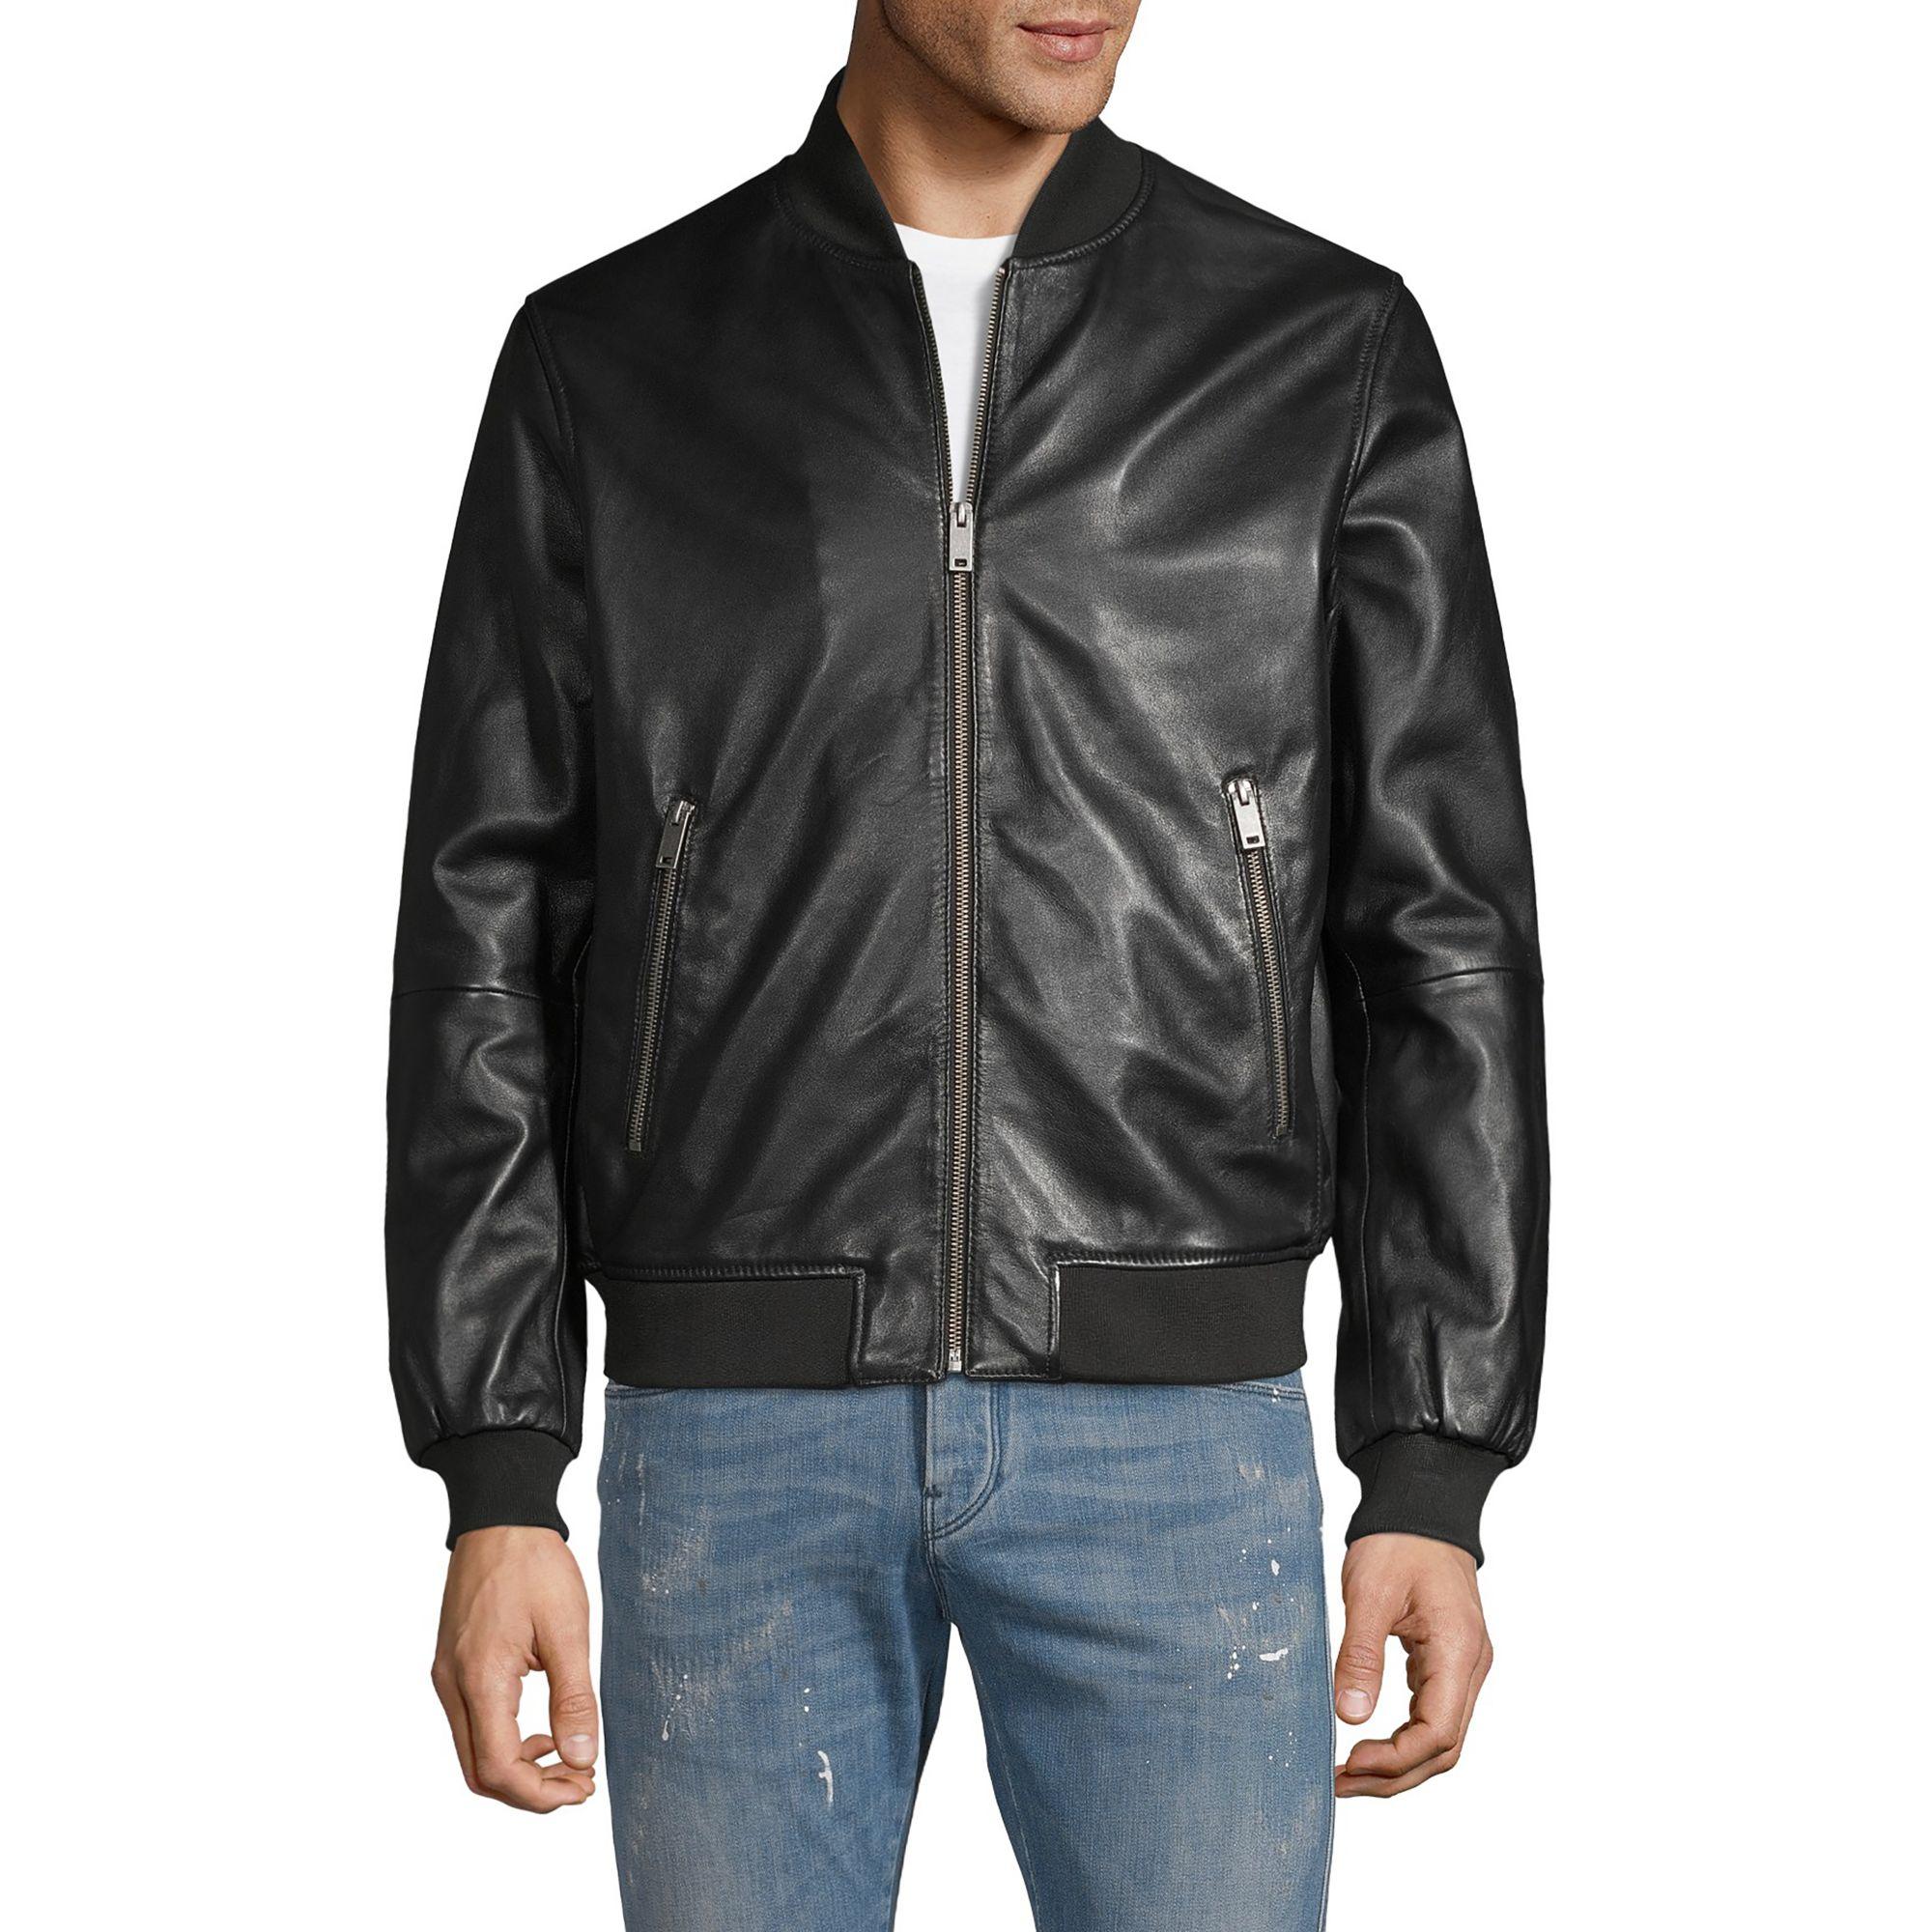 Saks Fifth Avenue Full-zip Leather Bomber Jacket in Black for Men - Lyst